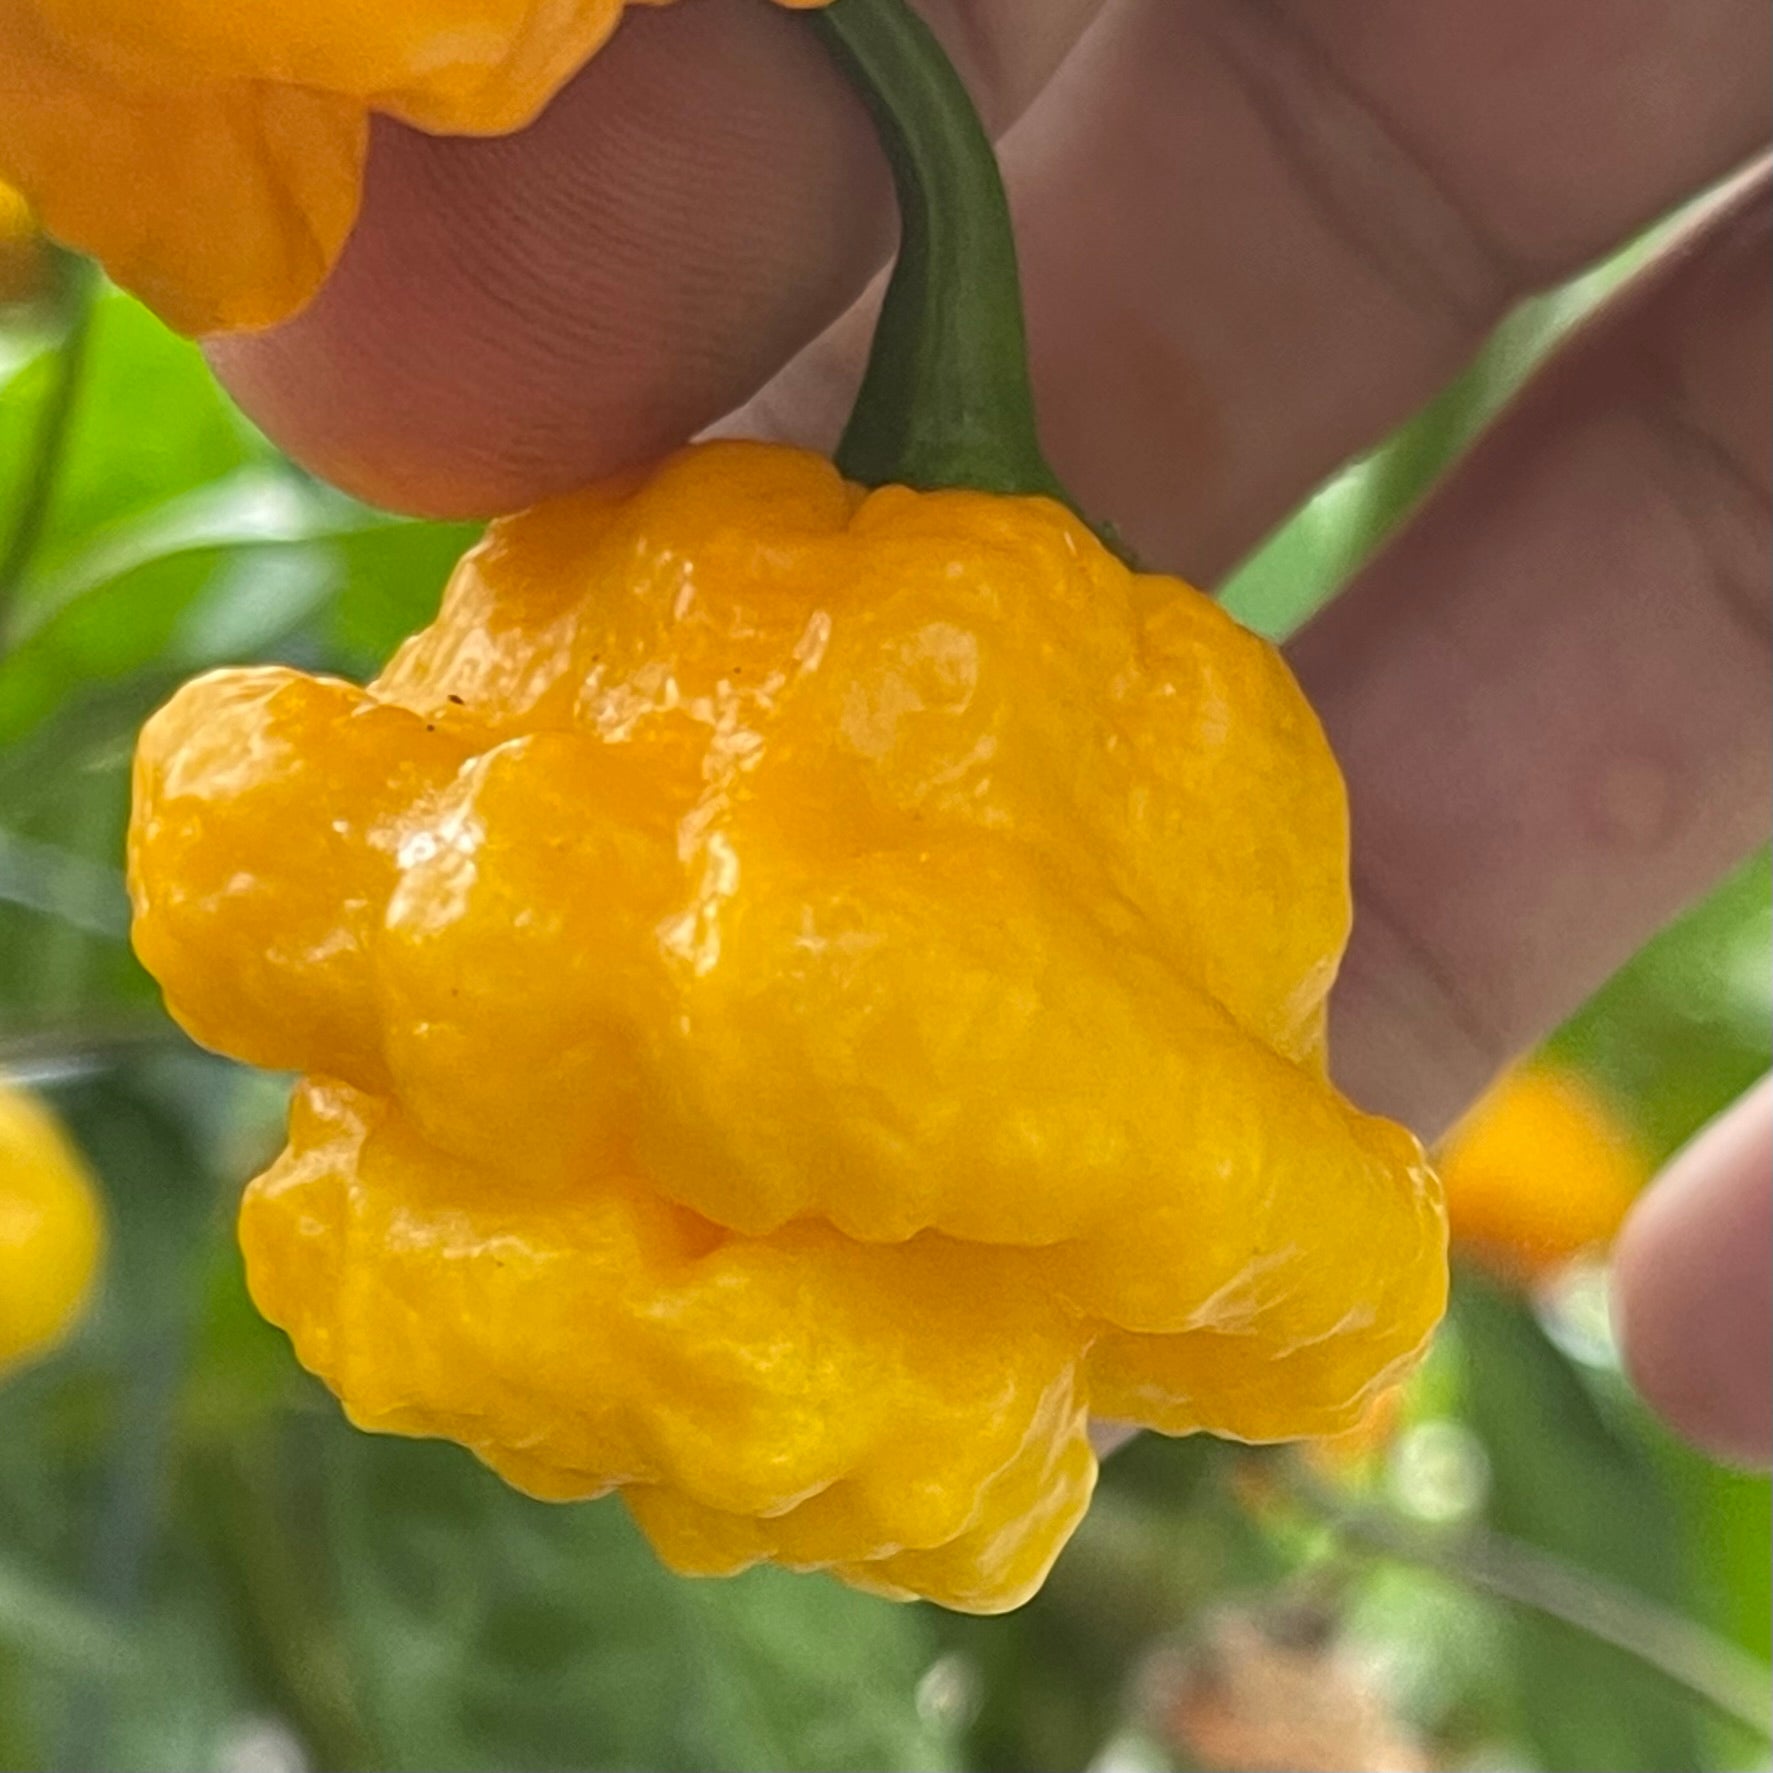 Scotch Bonnet Freeport Orange Pepper Seeds - 86peppers